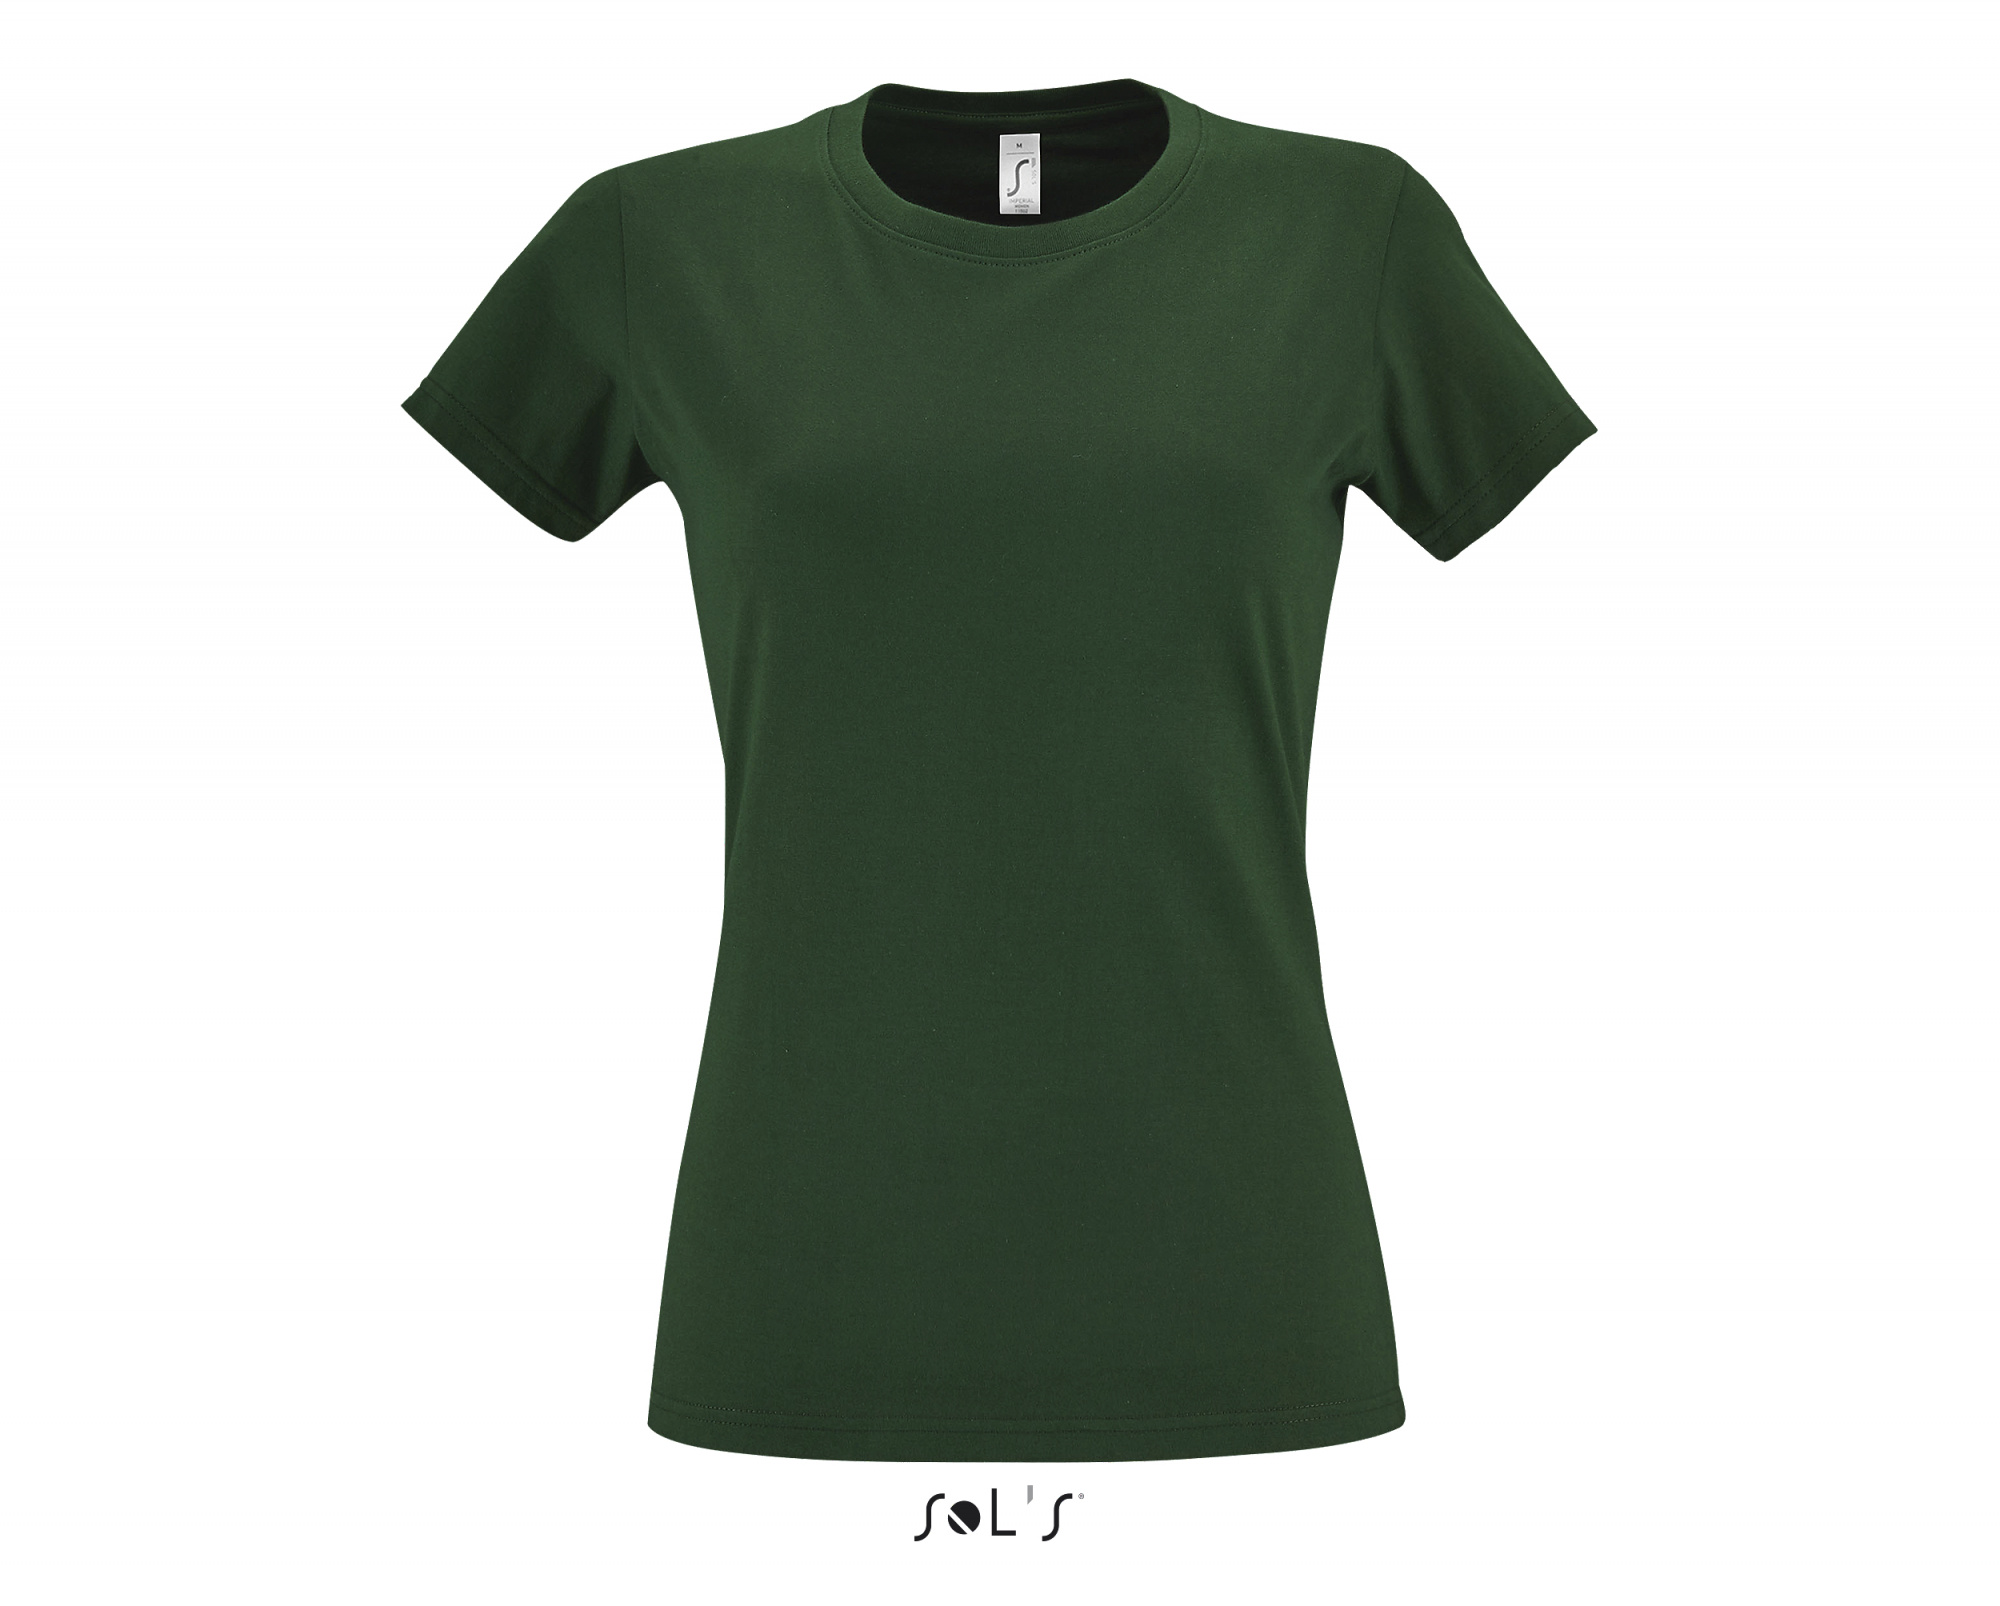 Фуфайка (футболка) IMPERIAL женская,Темно-зеленый 3XL